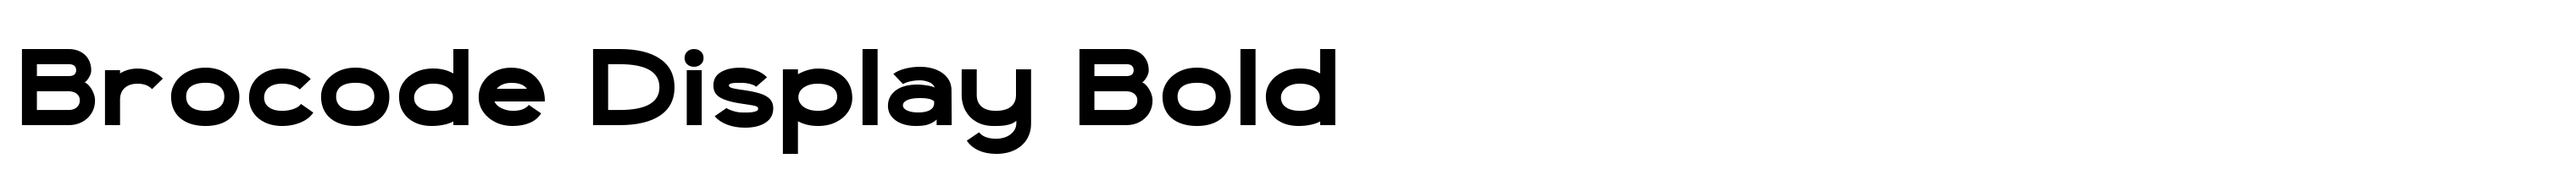 Brocode Display Bold